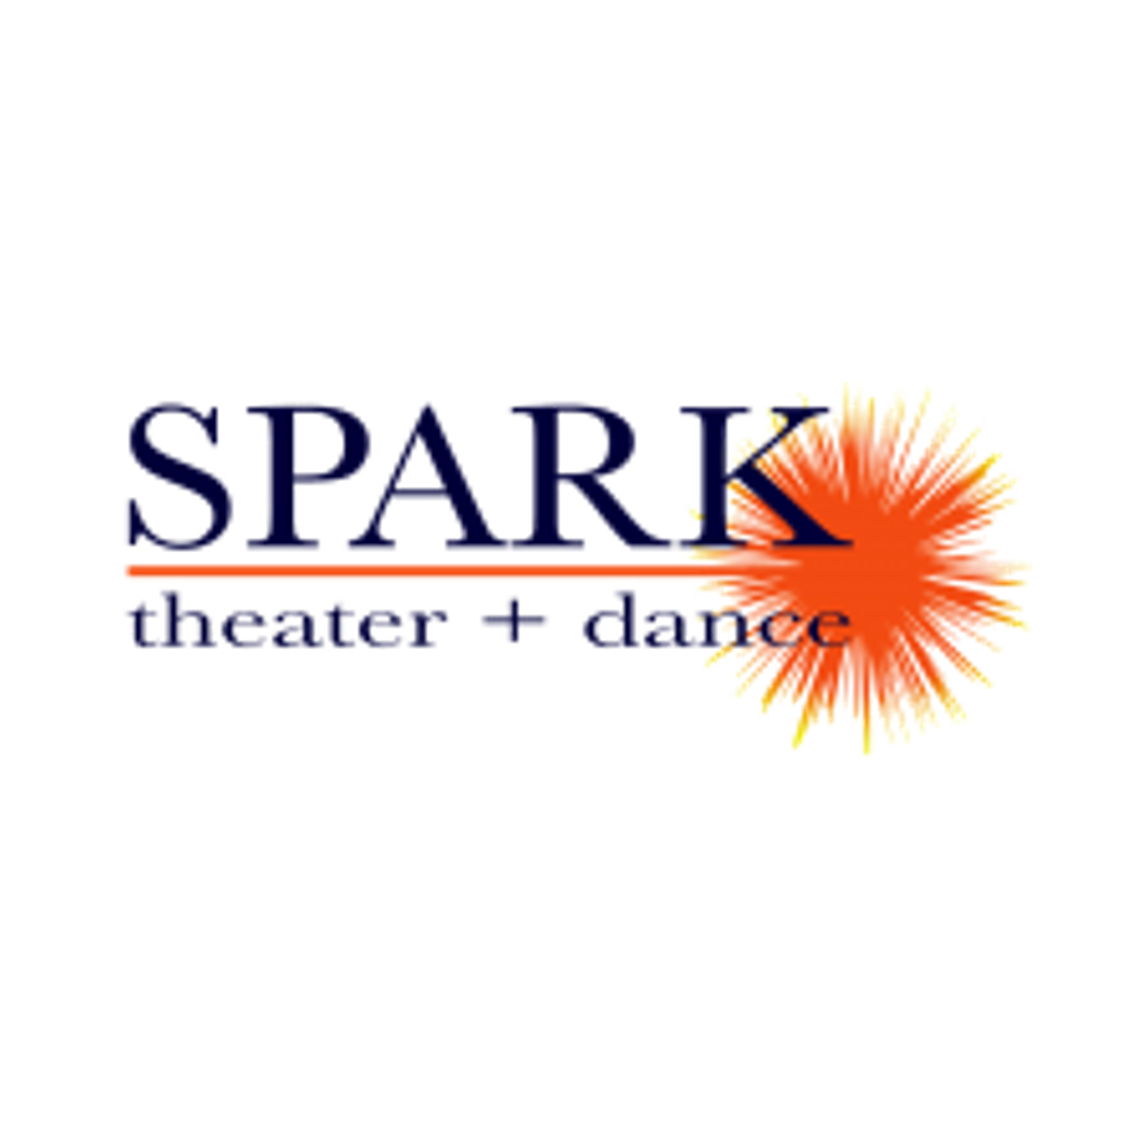 Spark Theater & Dance, Minneapolis